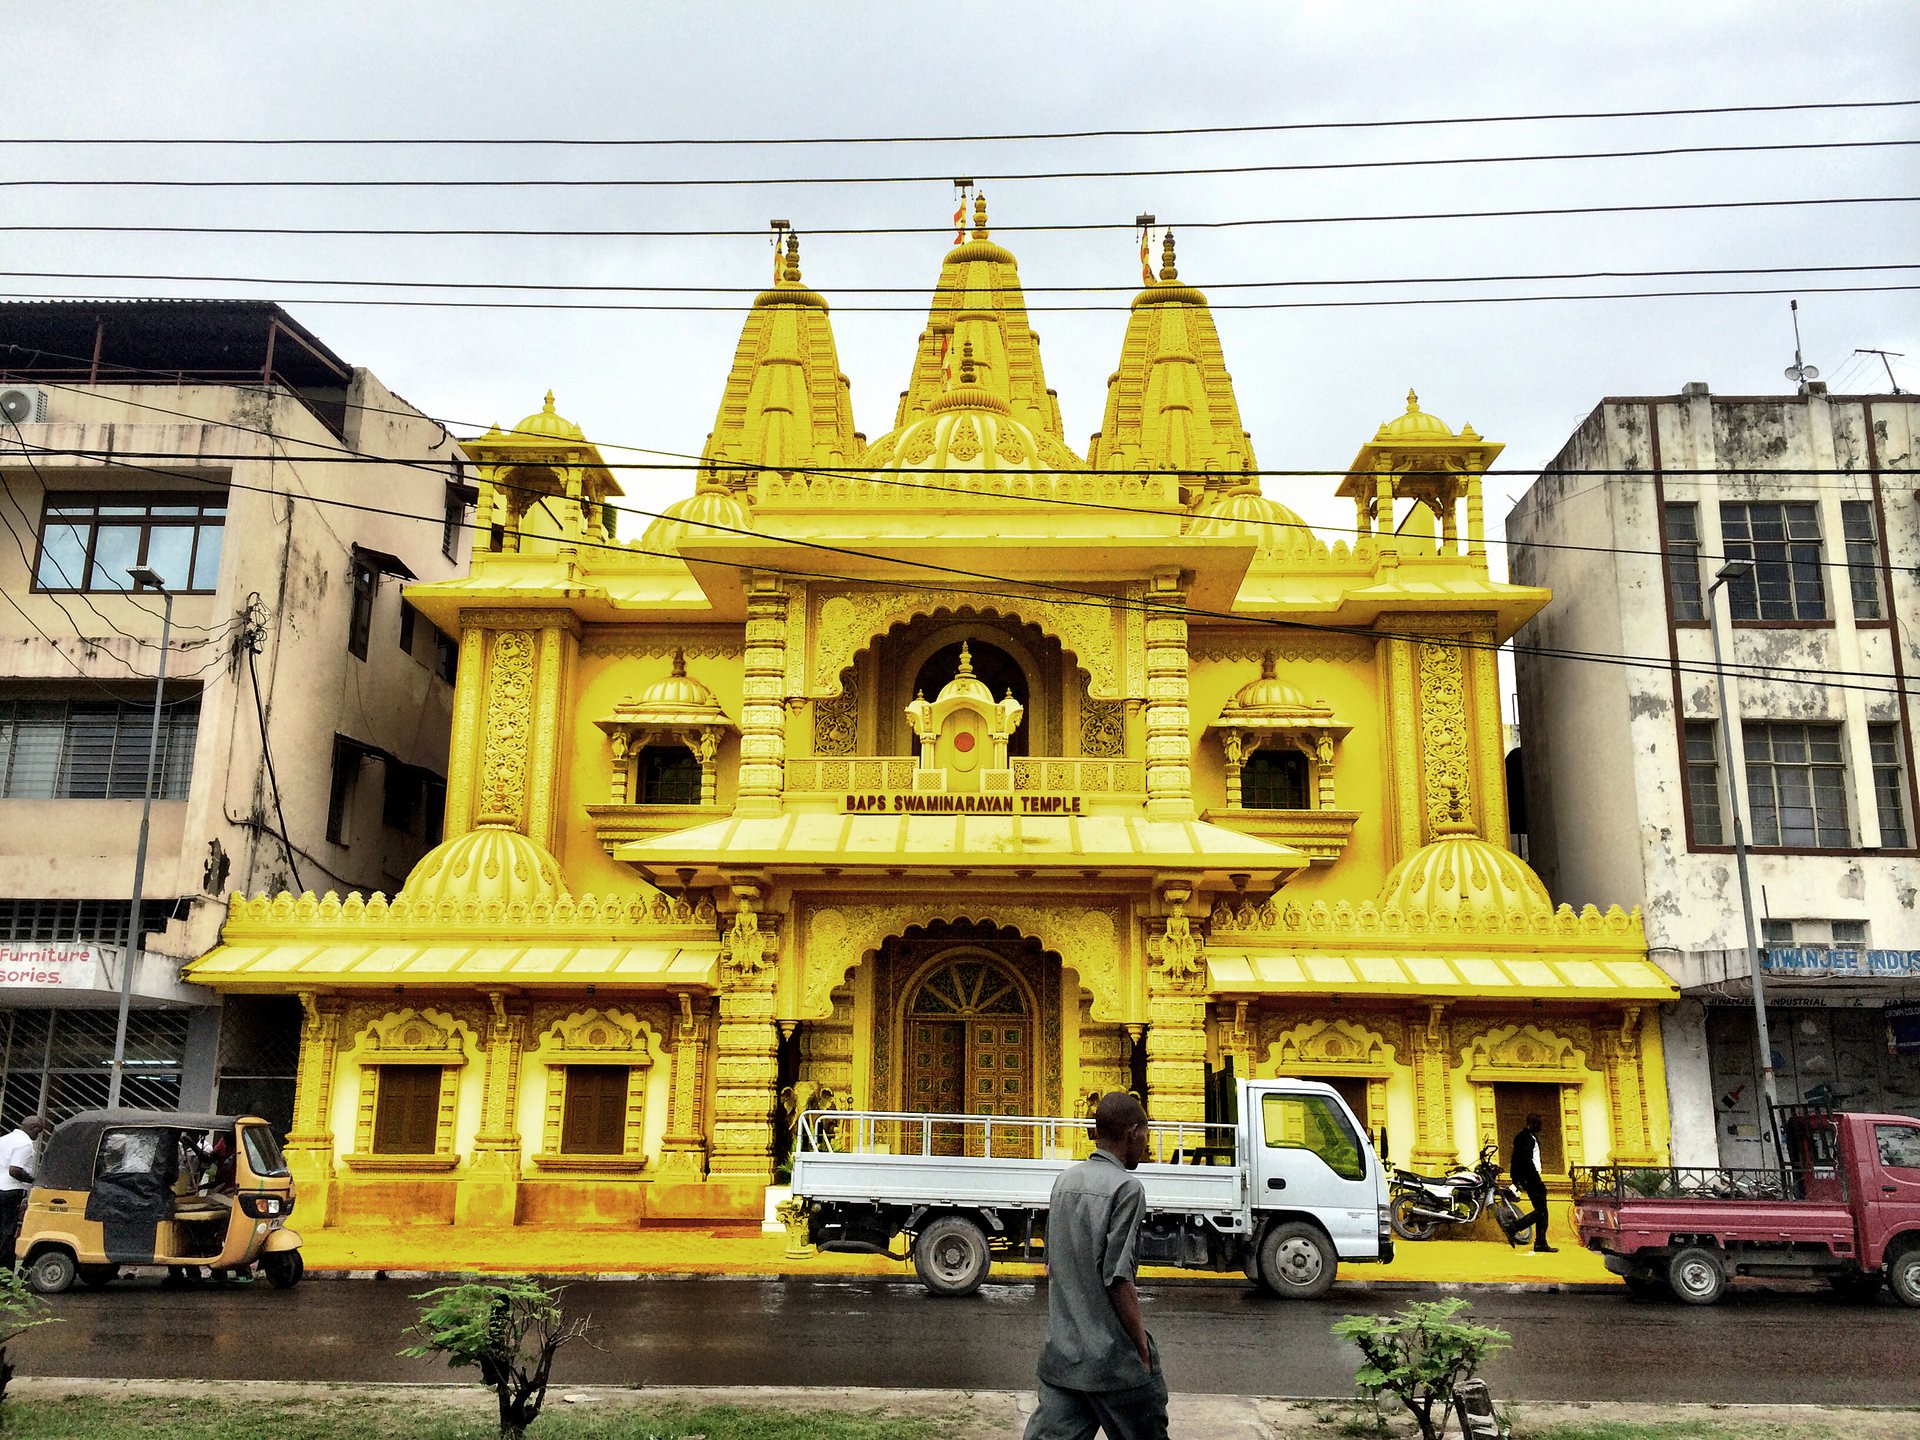 Optimistic yellow … the Baps Swaminarayan temple in Nairobi. Photograph: Mohammed Altoum